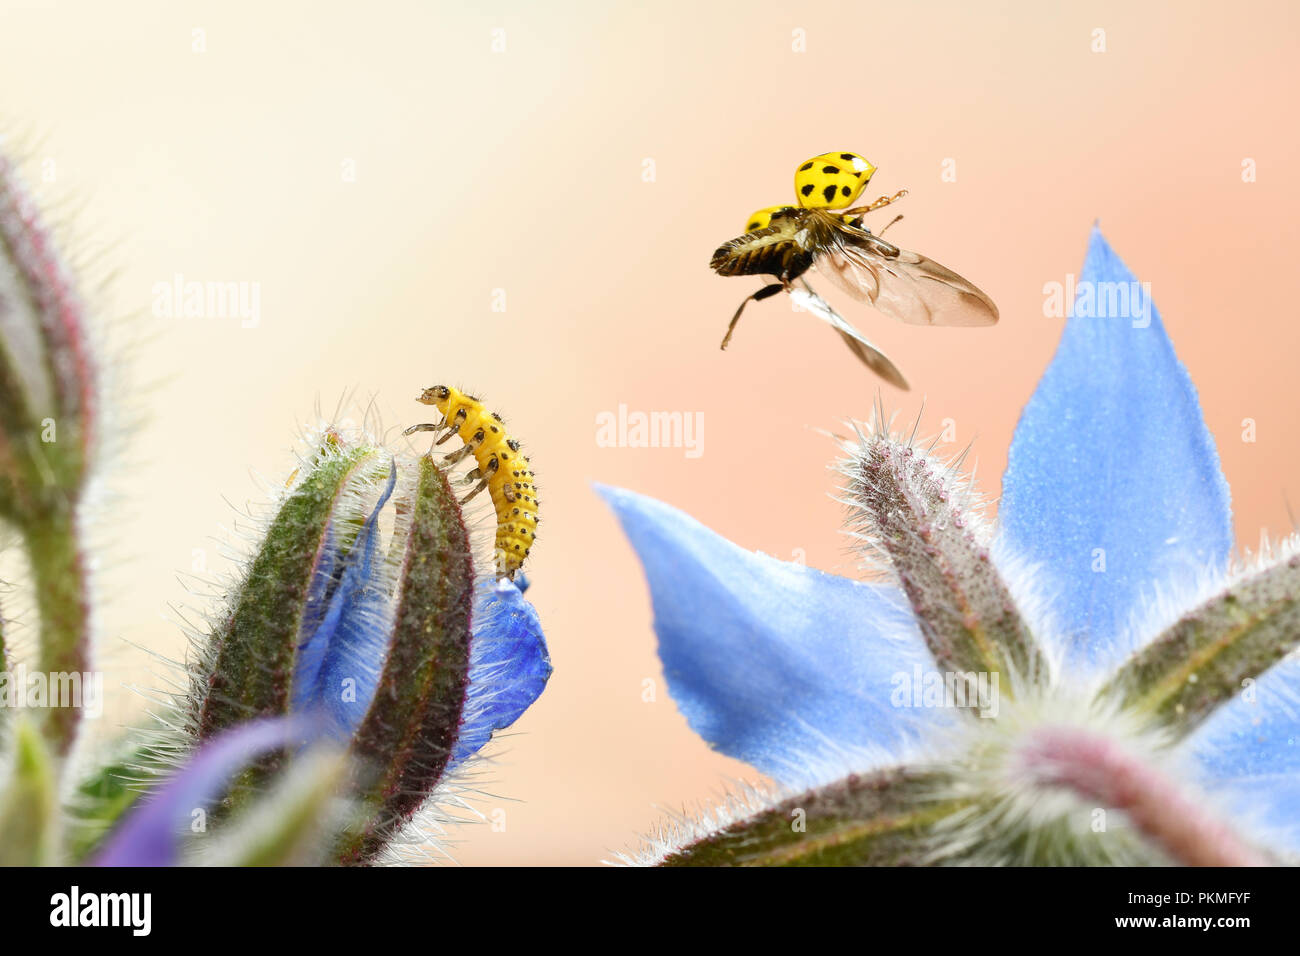 22-spot ladybird (Psyllobora vigintiduopunctata) in flight, larva, borage blossom, Germany Stock Photo